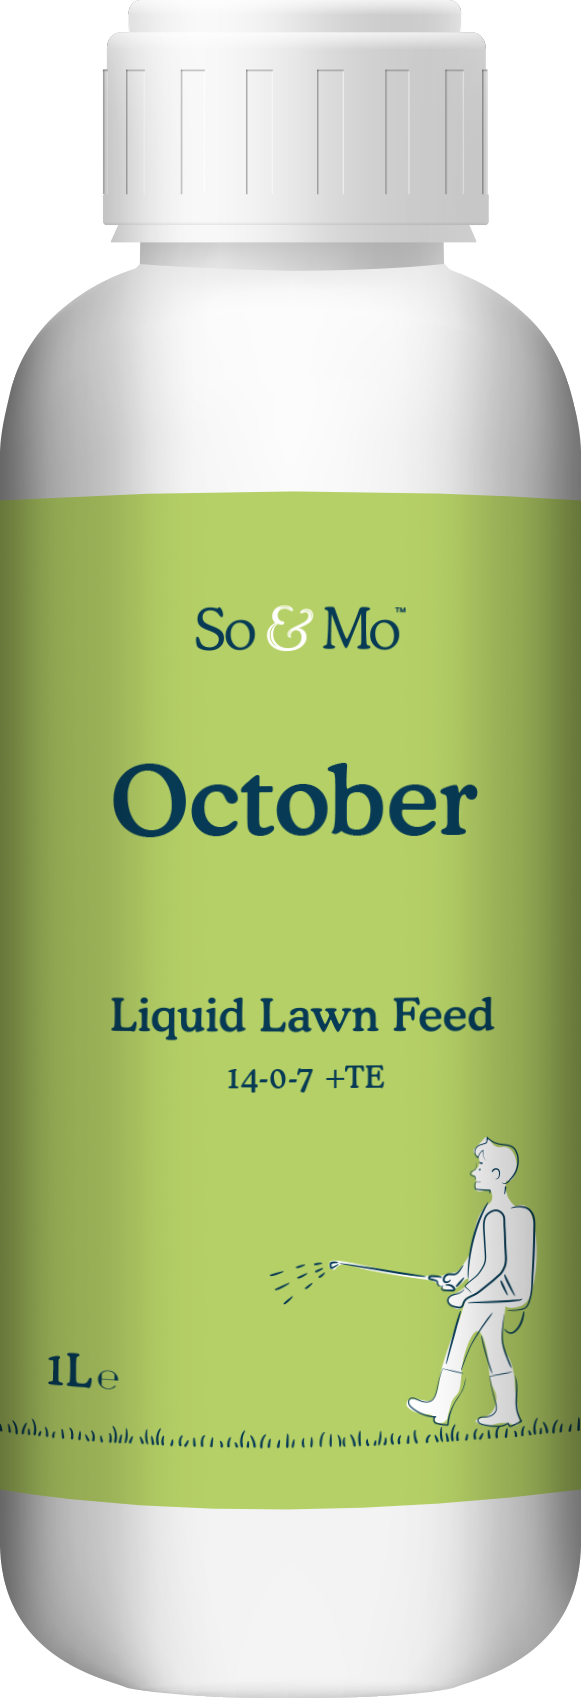 October Liquid Lawn Feed Bottle